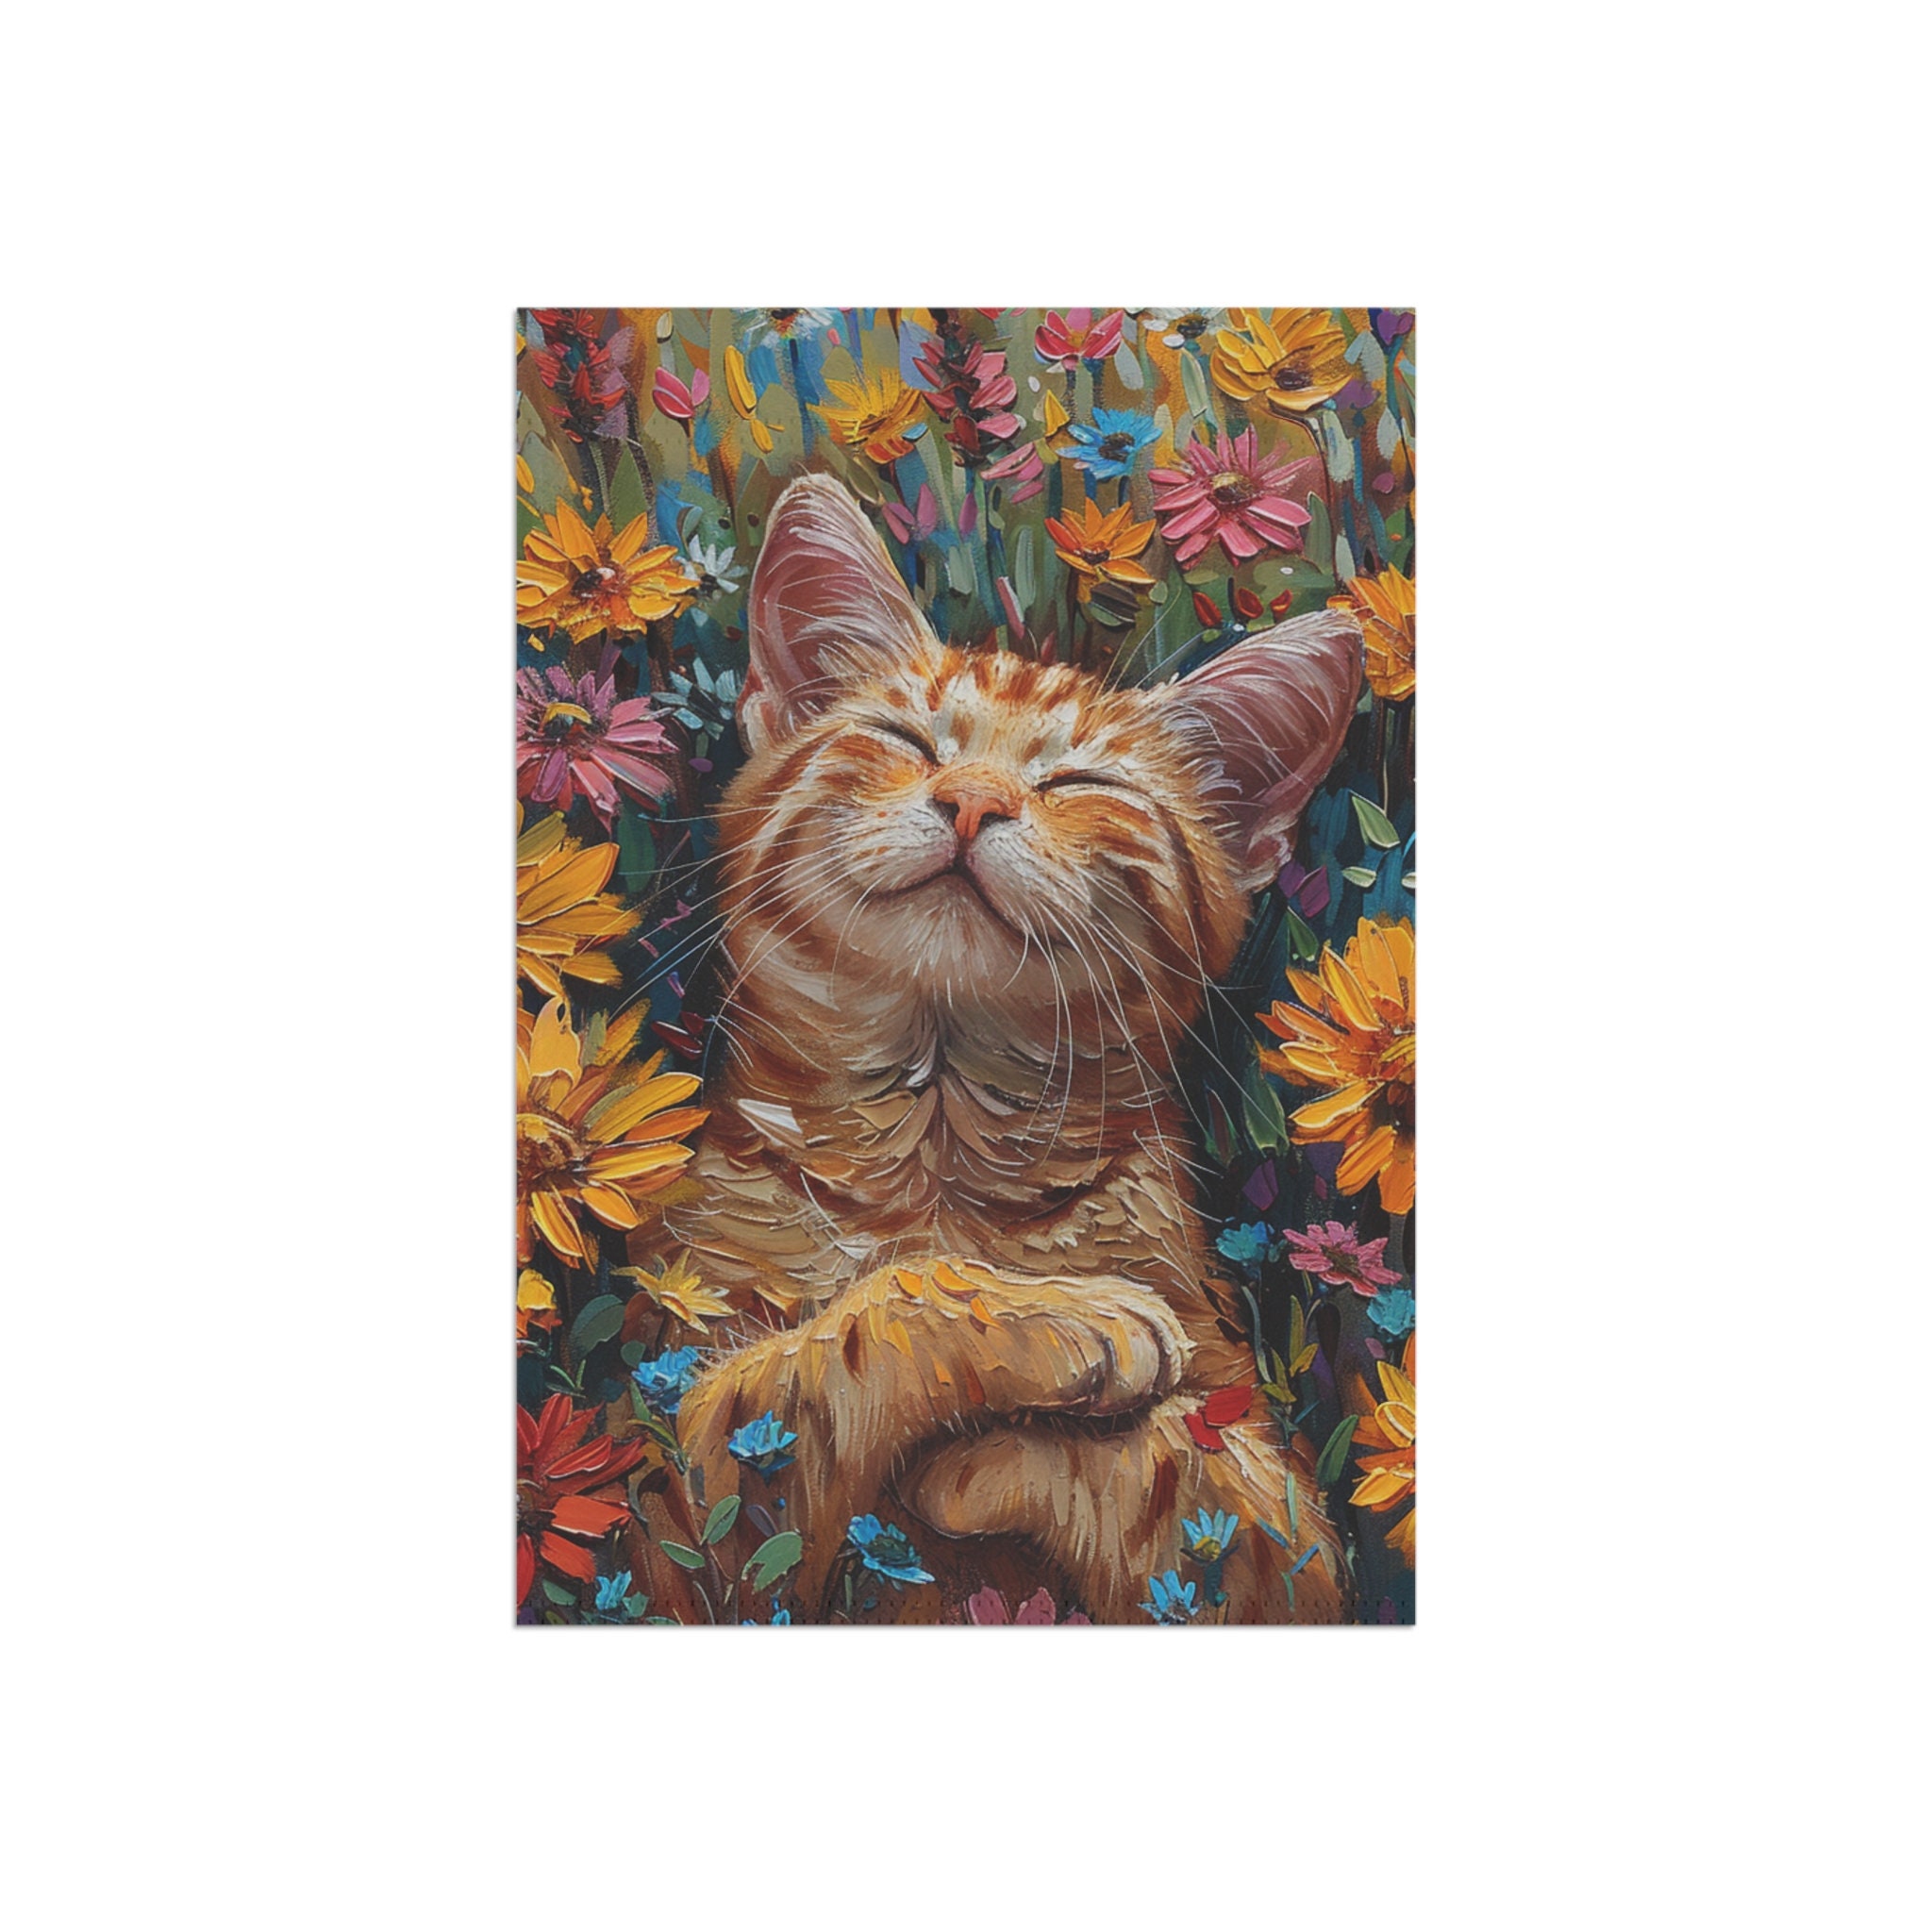 Sleeping Orange Tabby Cat, Yard Flag, Outdoor Decor, Garden Flag, Garden Signs, Cat Lovers, Cat Gifts, Cute Cat Gift